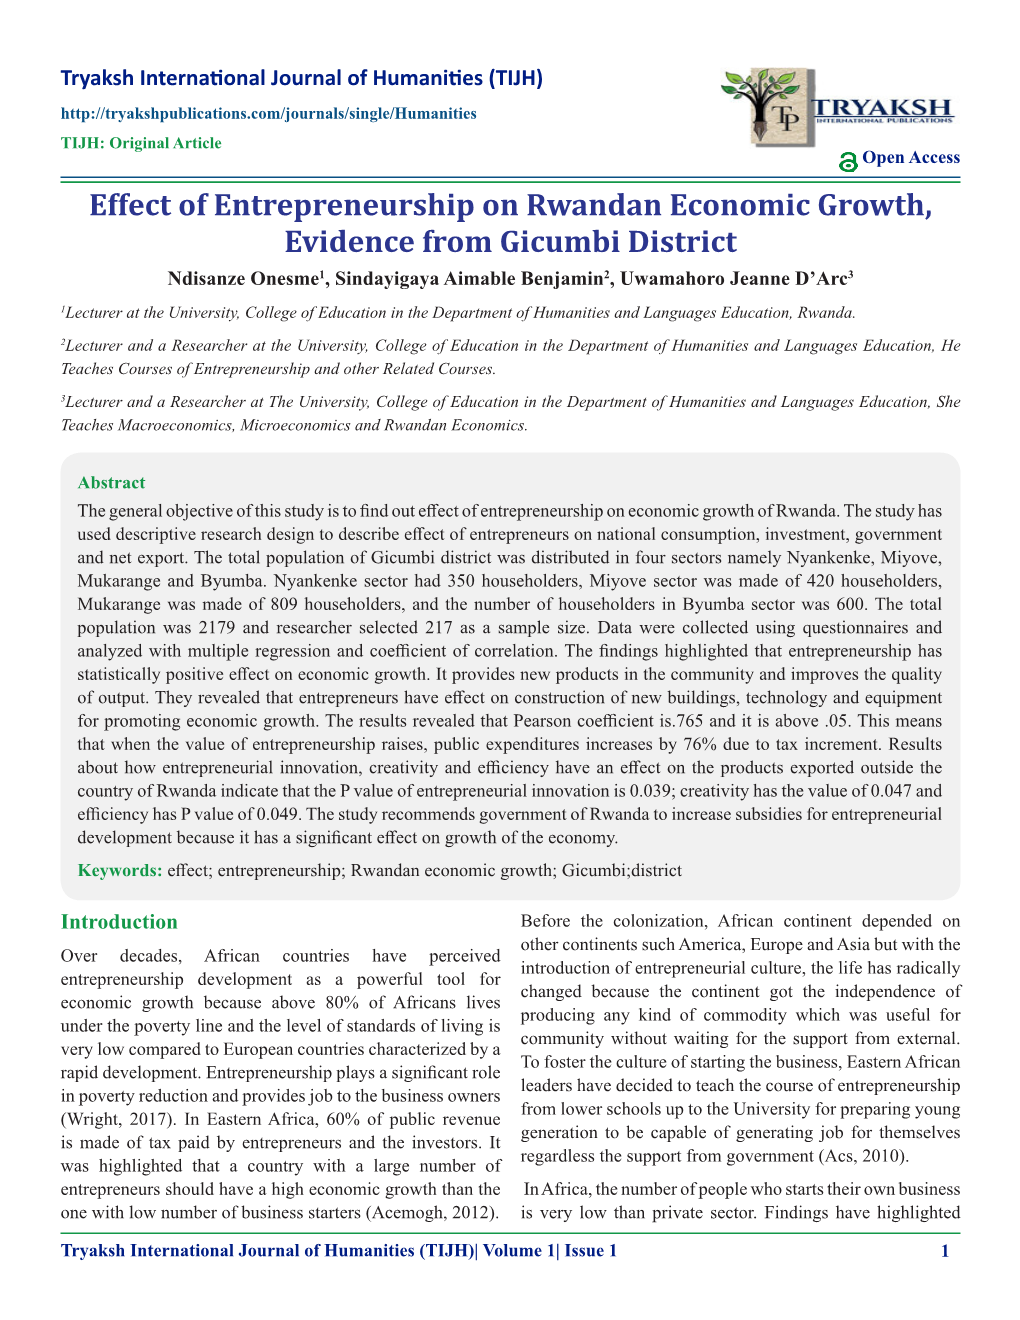 Effect of Entrepreneurship on Rwandan Economic Growth